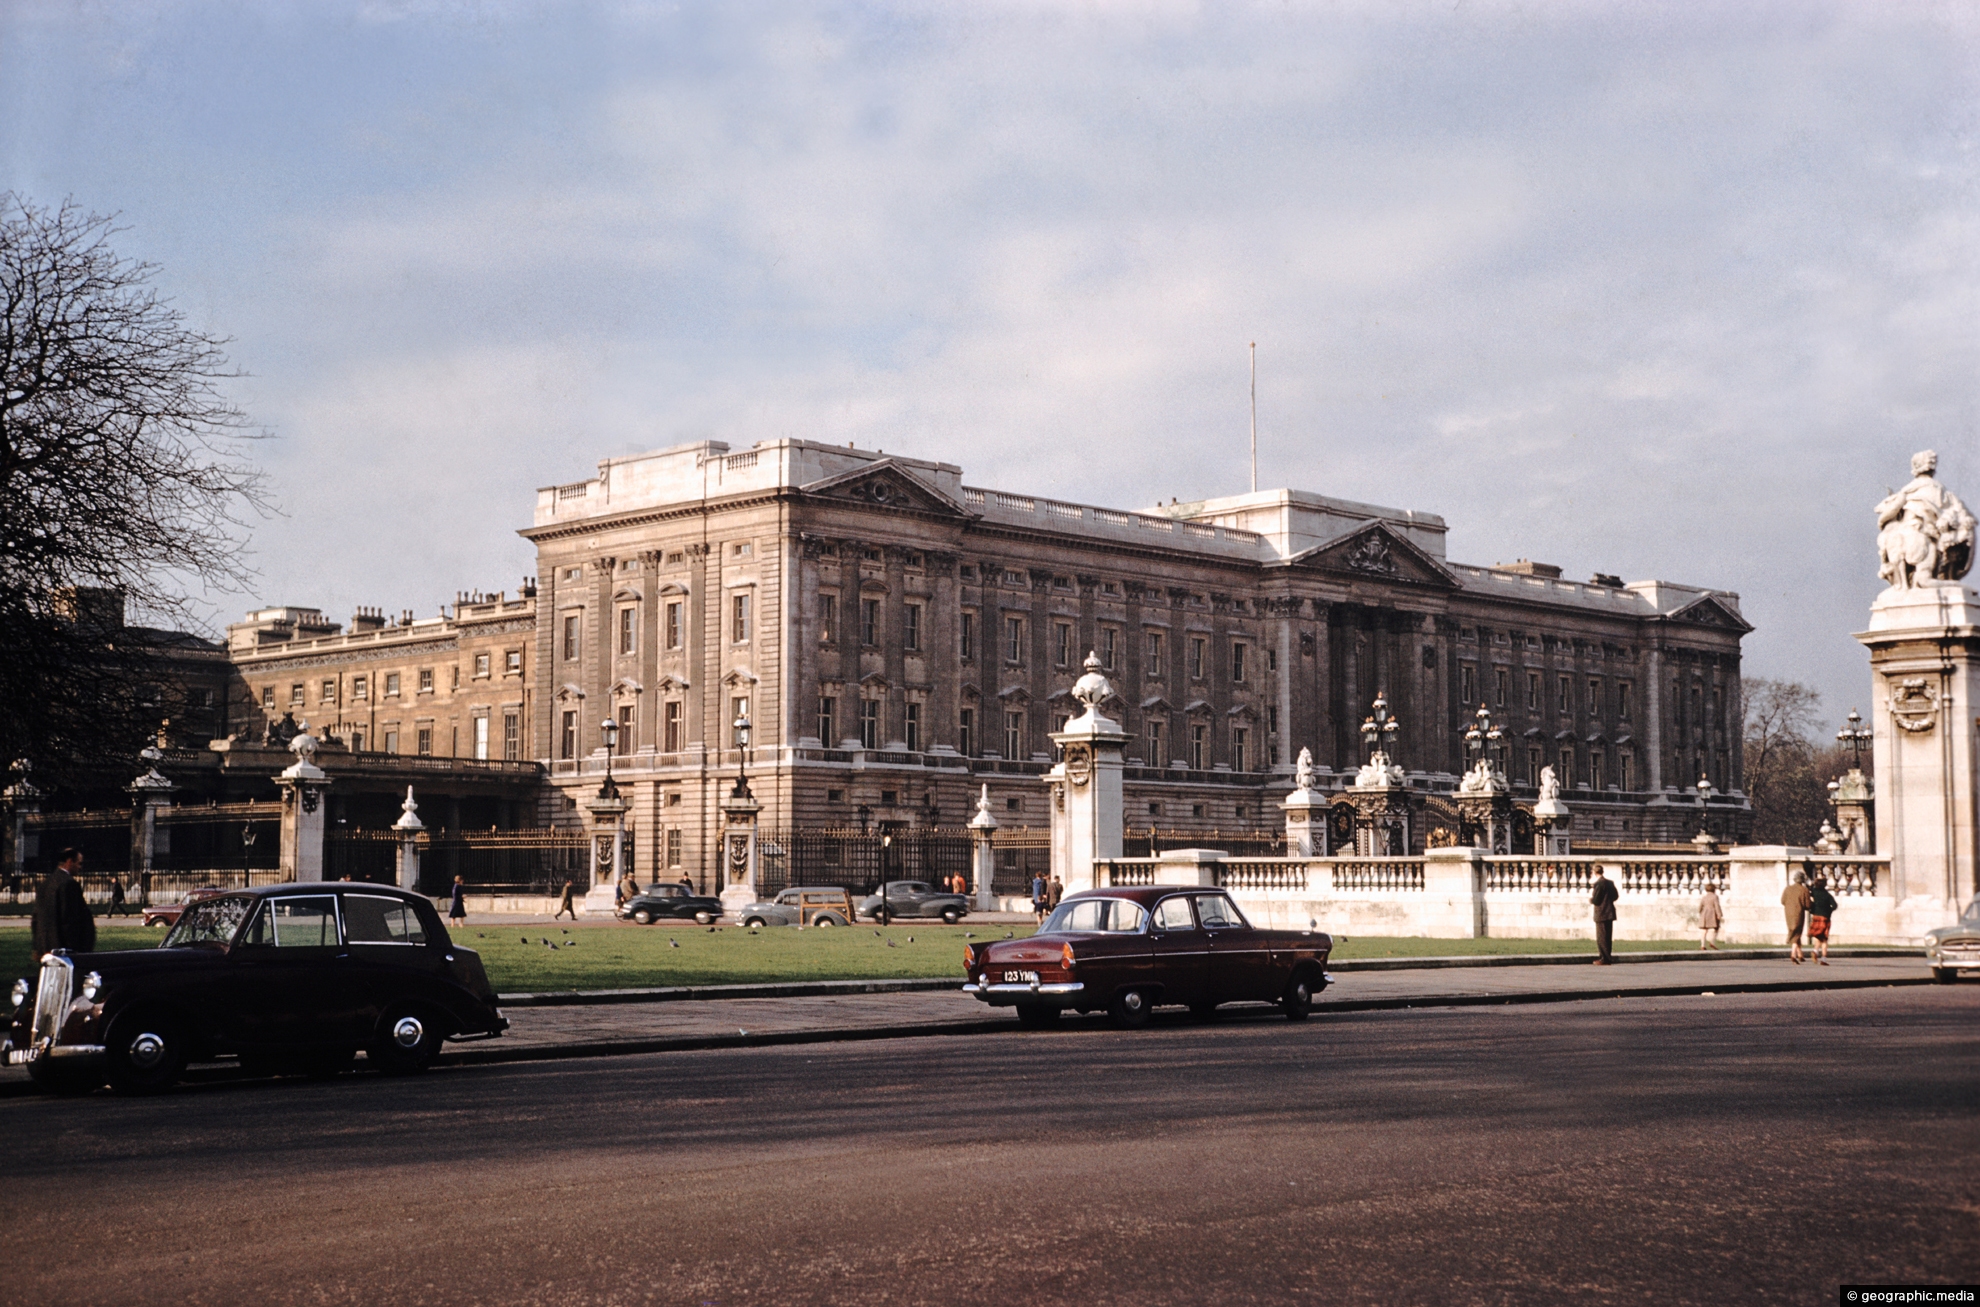 Bucking Palace in London